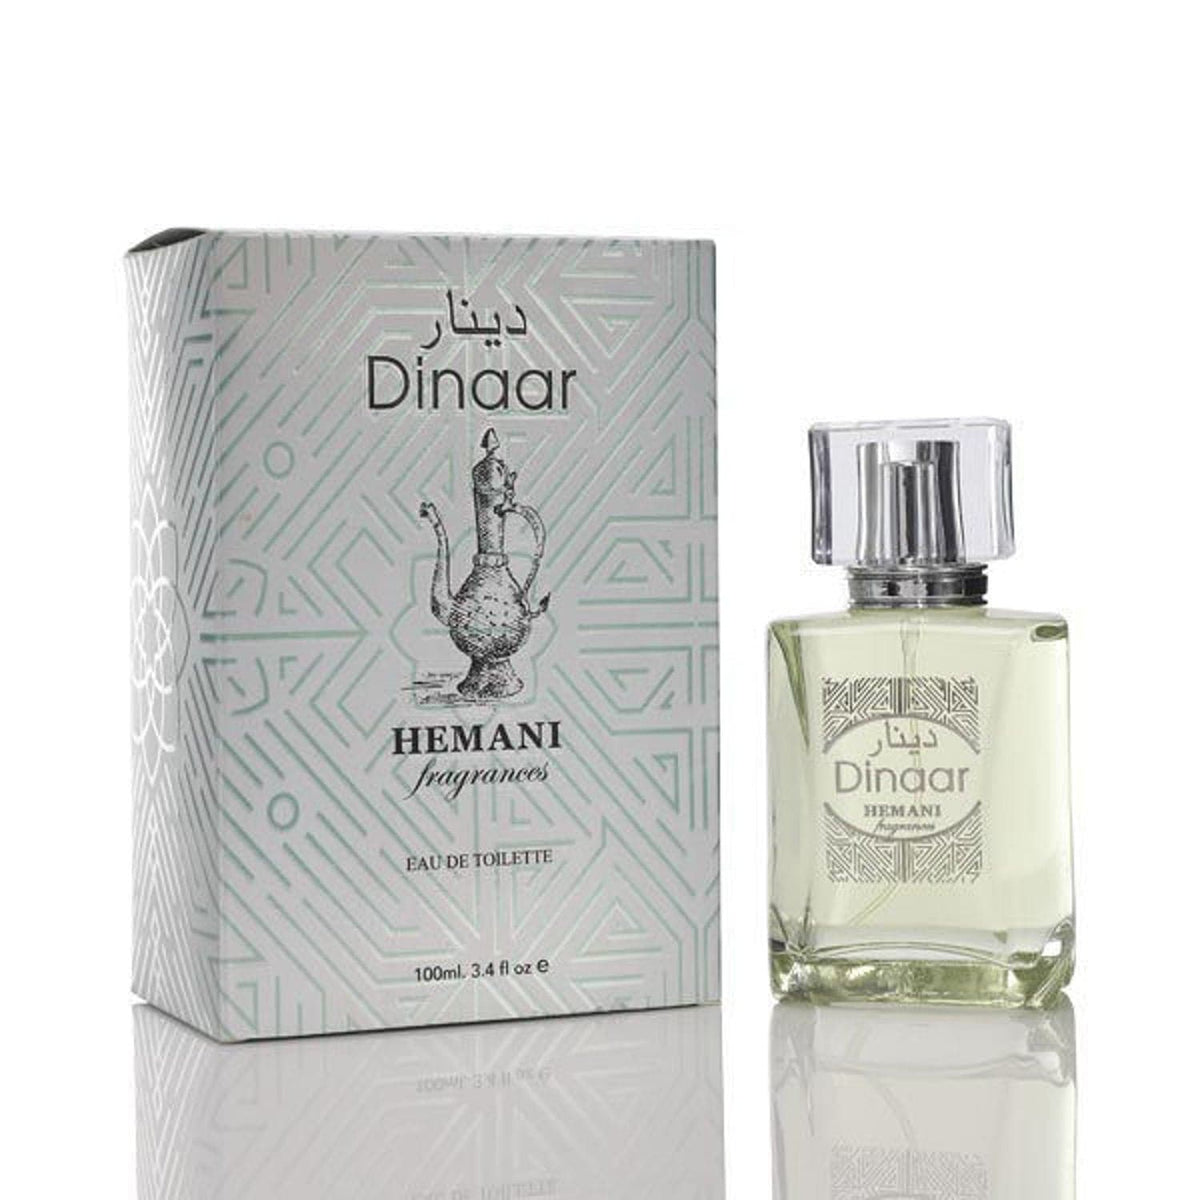 Hemani Dinaar Perfume For Men & Women - Premium Perfume & Cologne from Hemani - Just Rs 1350! Shop now at Cozmetica